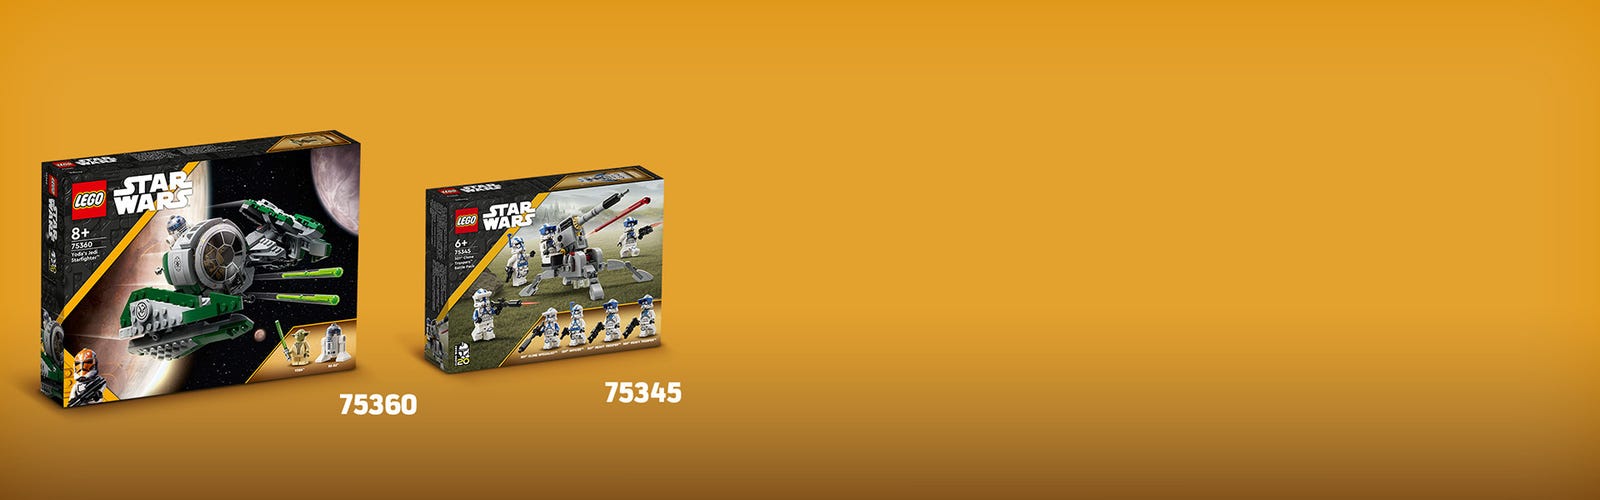 LEGO Yoda's Jedi Starfighter 75360 6427700 - Best Buy